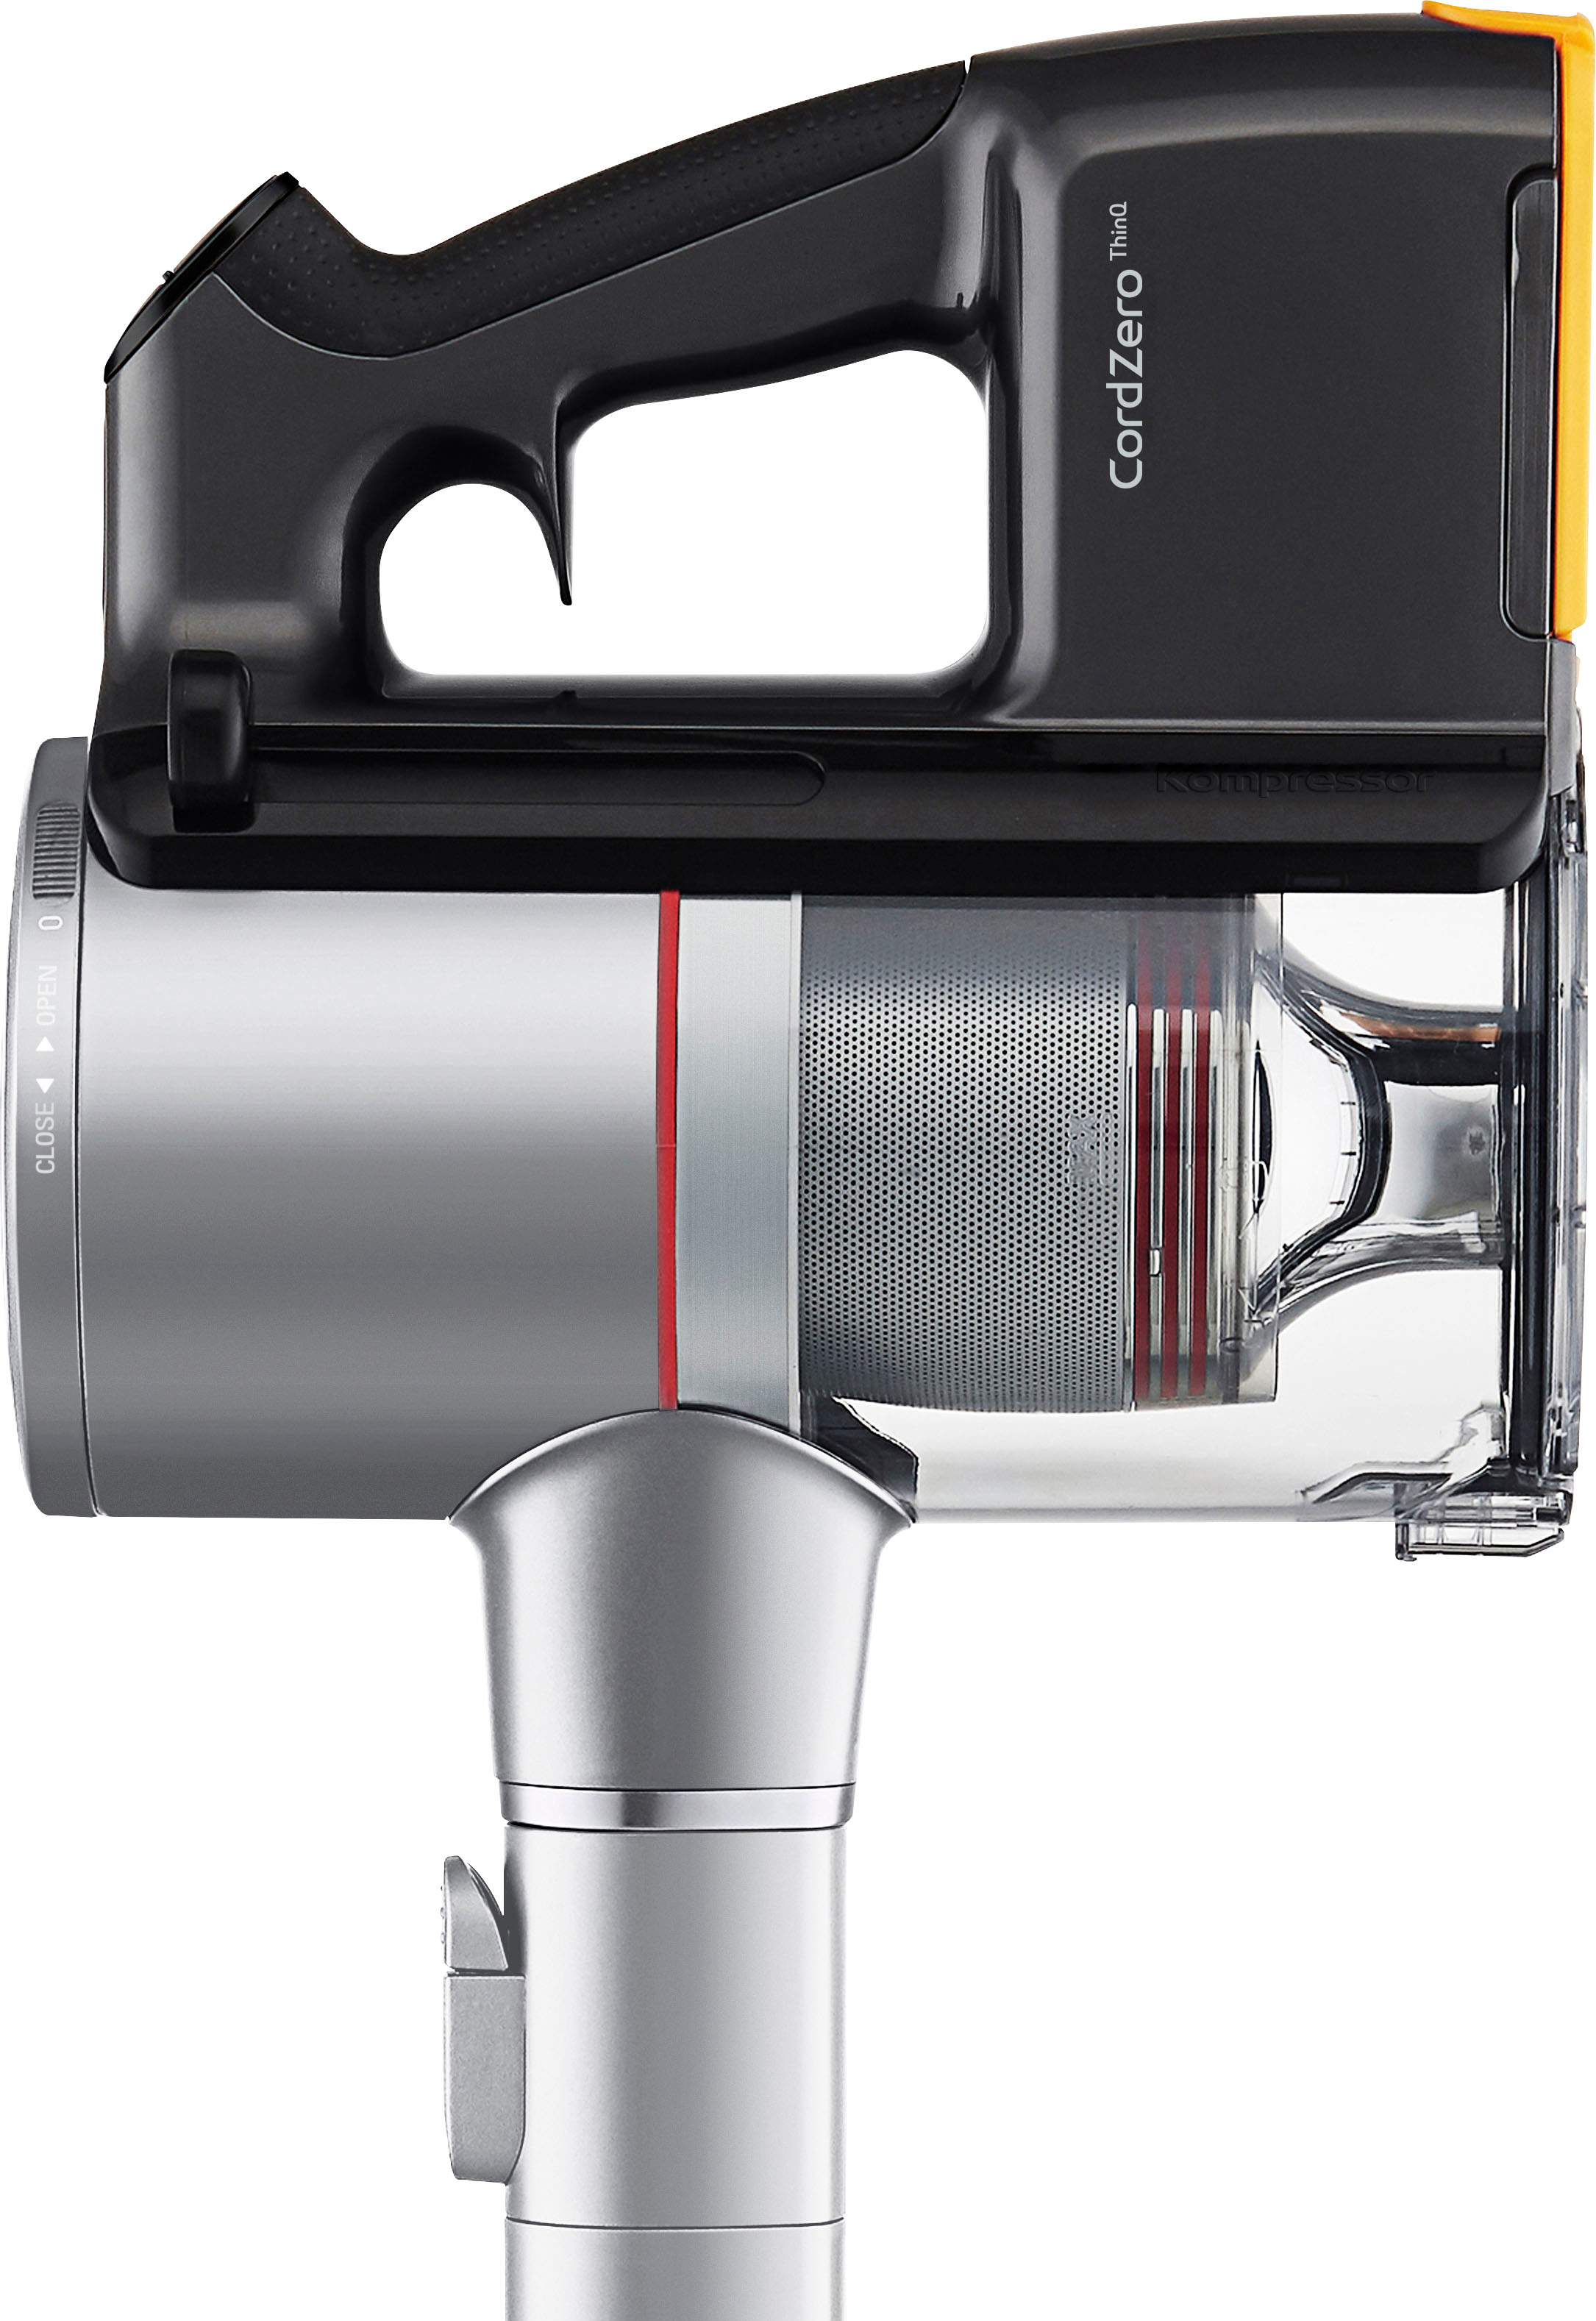 Angle View: LG - CordZero Cordless Stick Vacuum with ThinQ - Matte Silver